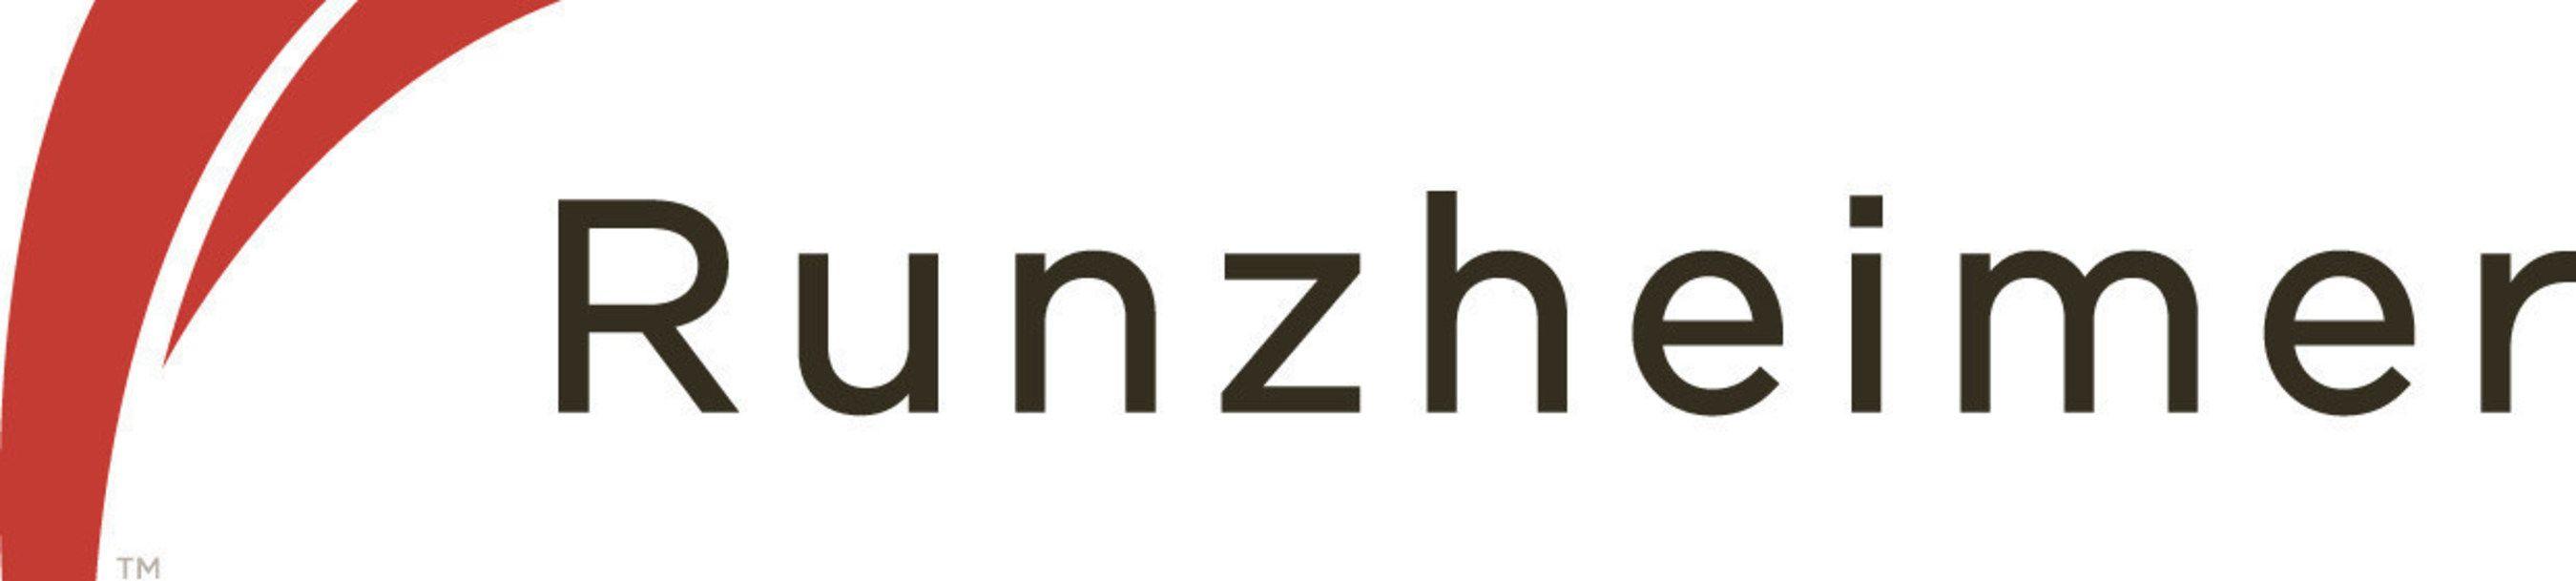 Runzheimer Logo - Runzheimer Announces Partnership and Integration with Concur to ...